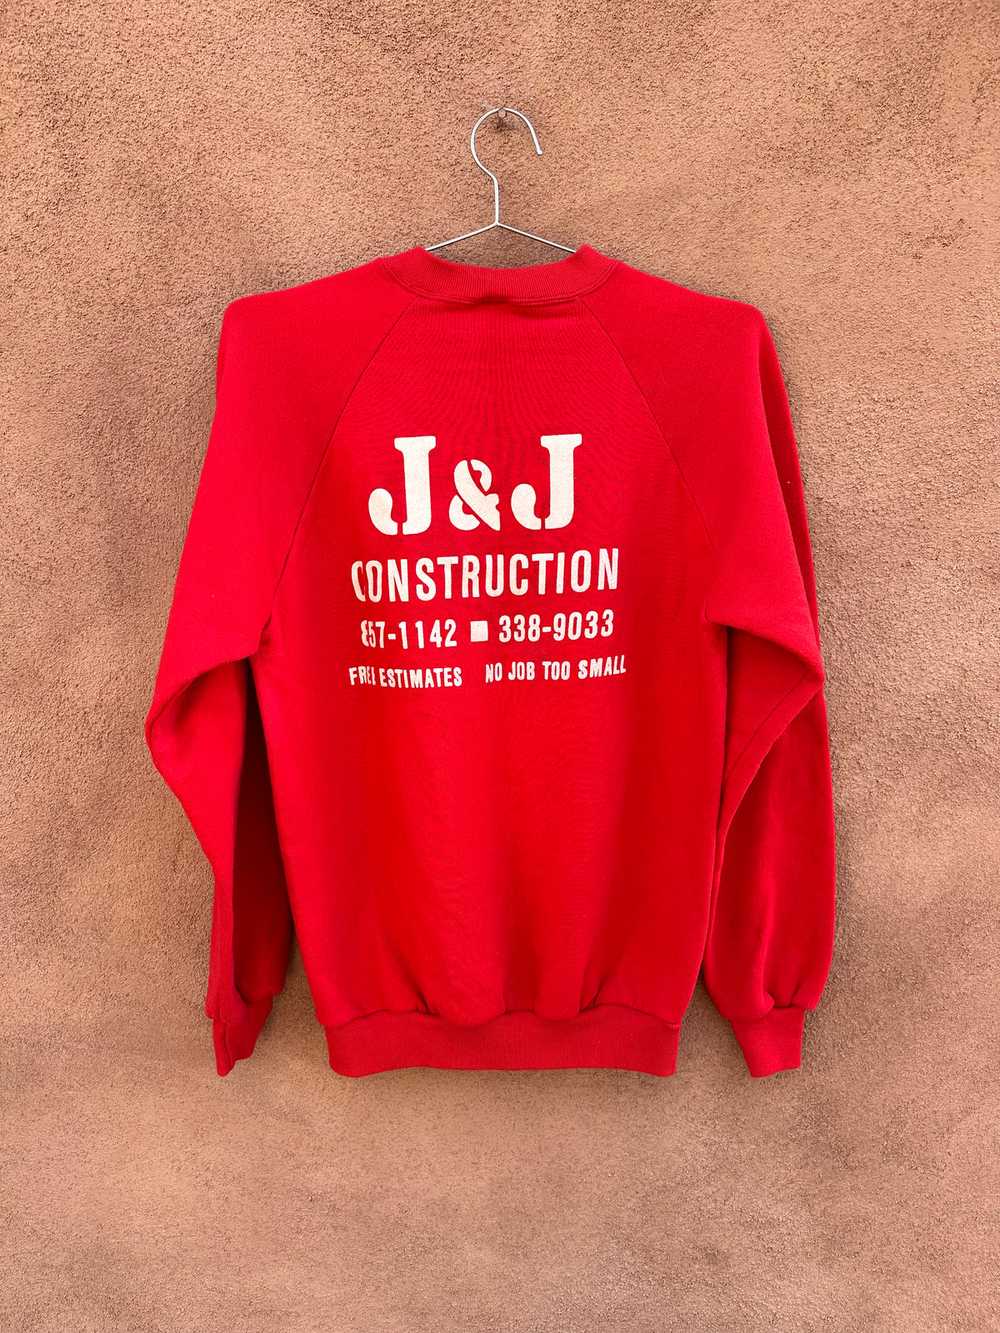 J & J Construction Sweatshirt - image 3